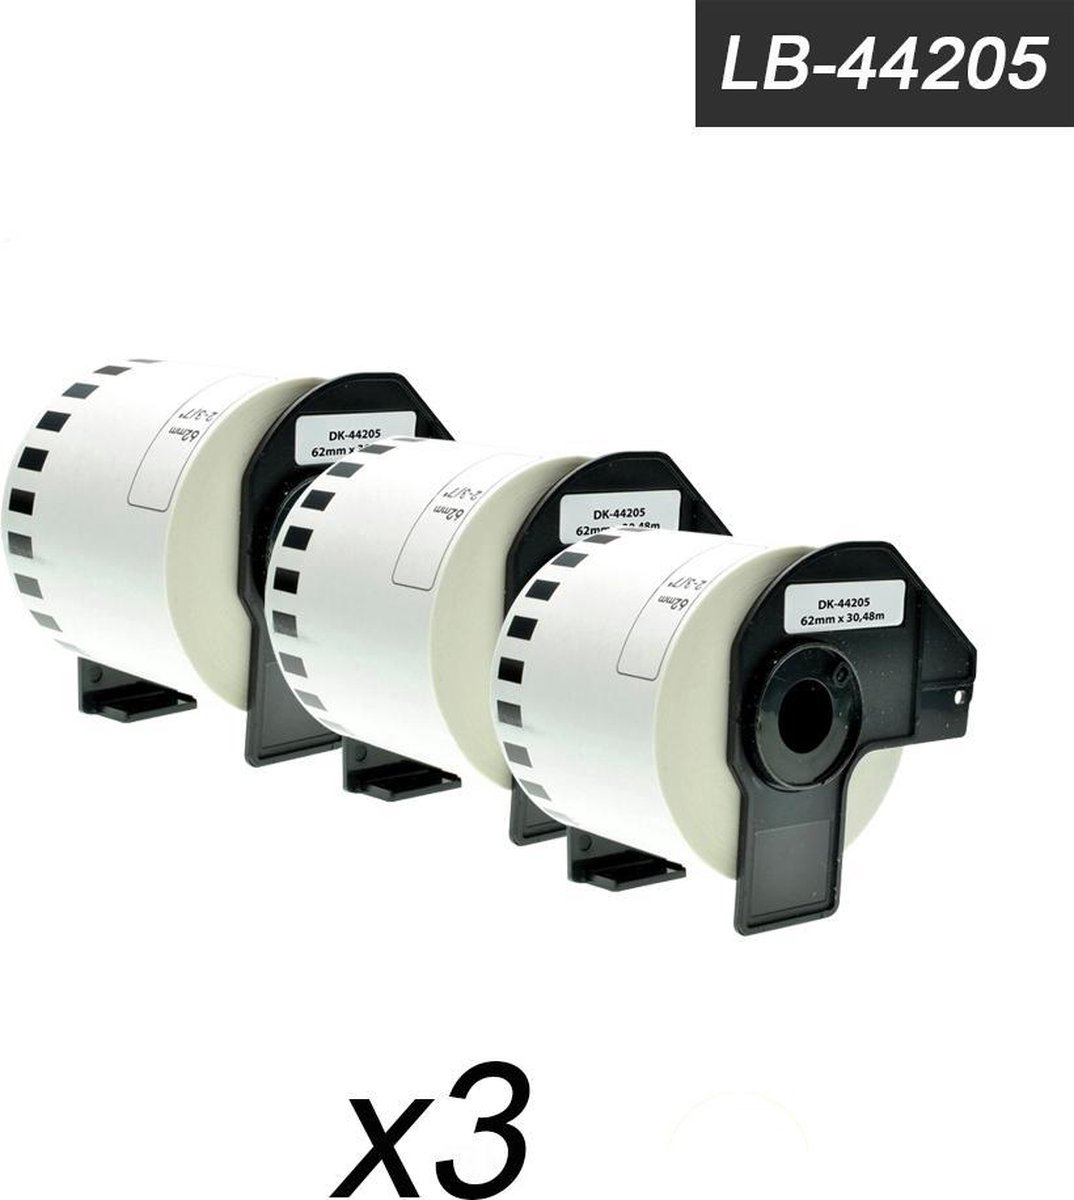 3x Brother DK-44205 Compatible voor Brother 's range of QL printers, 62mm * 30.48m